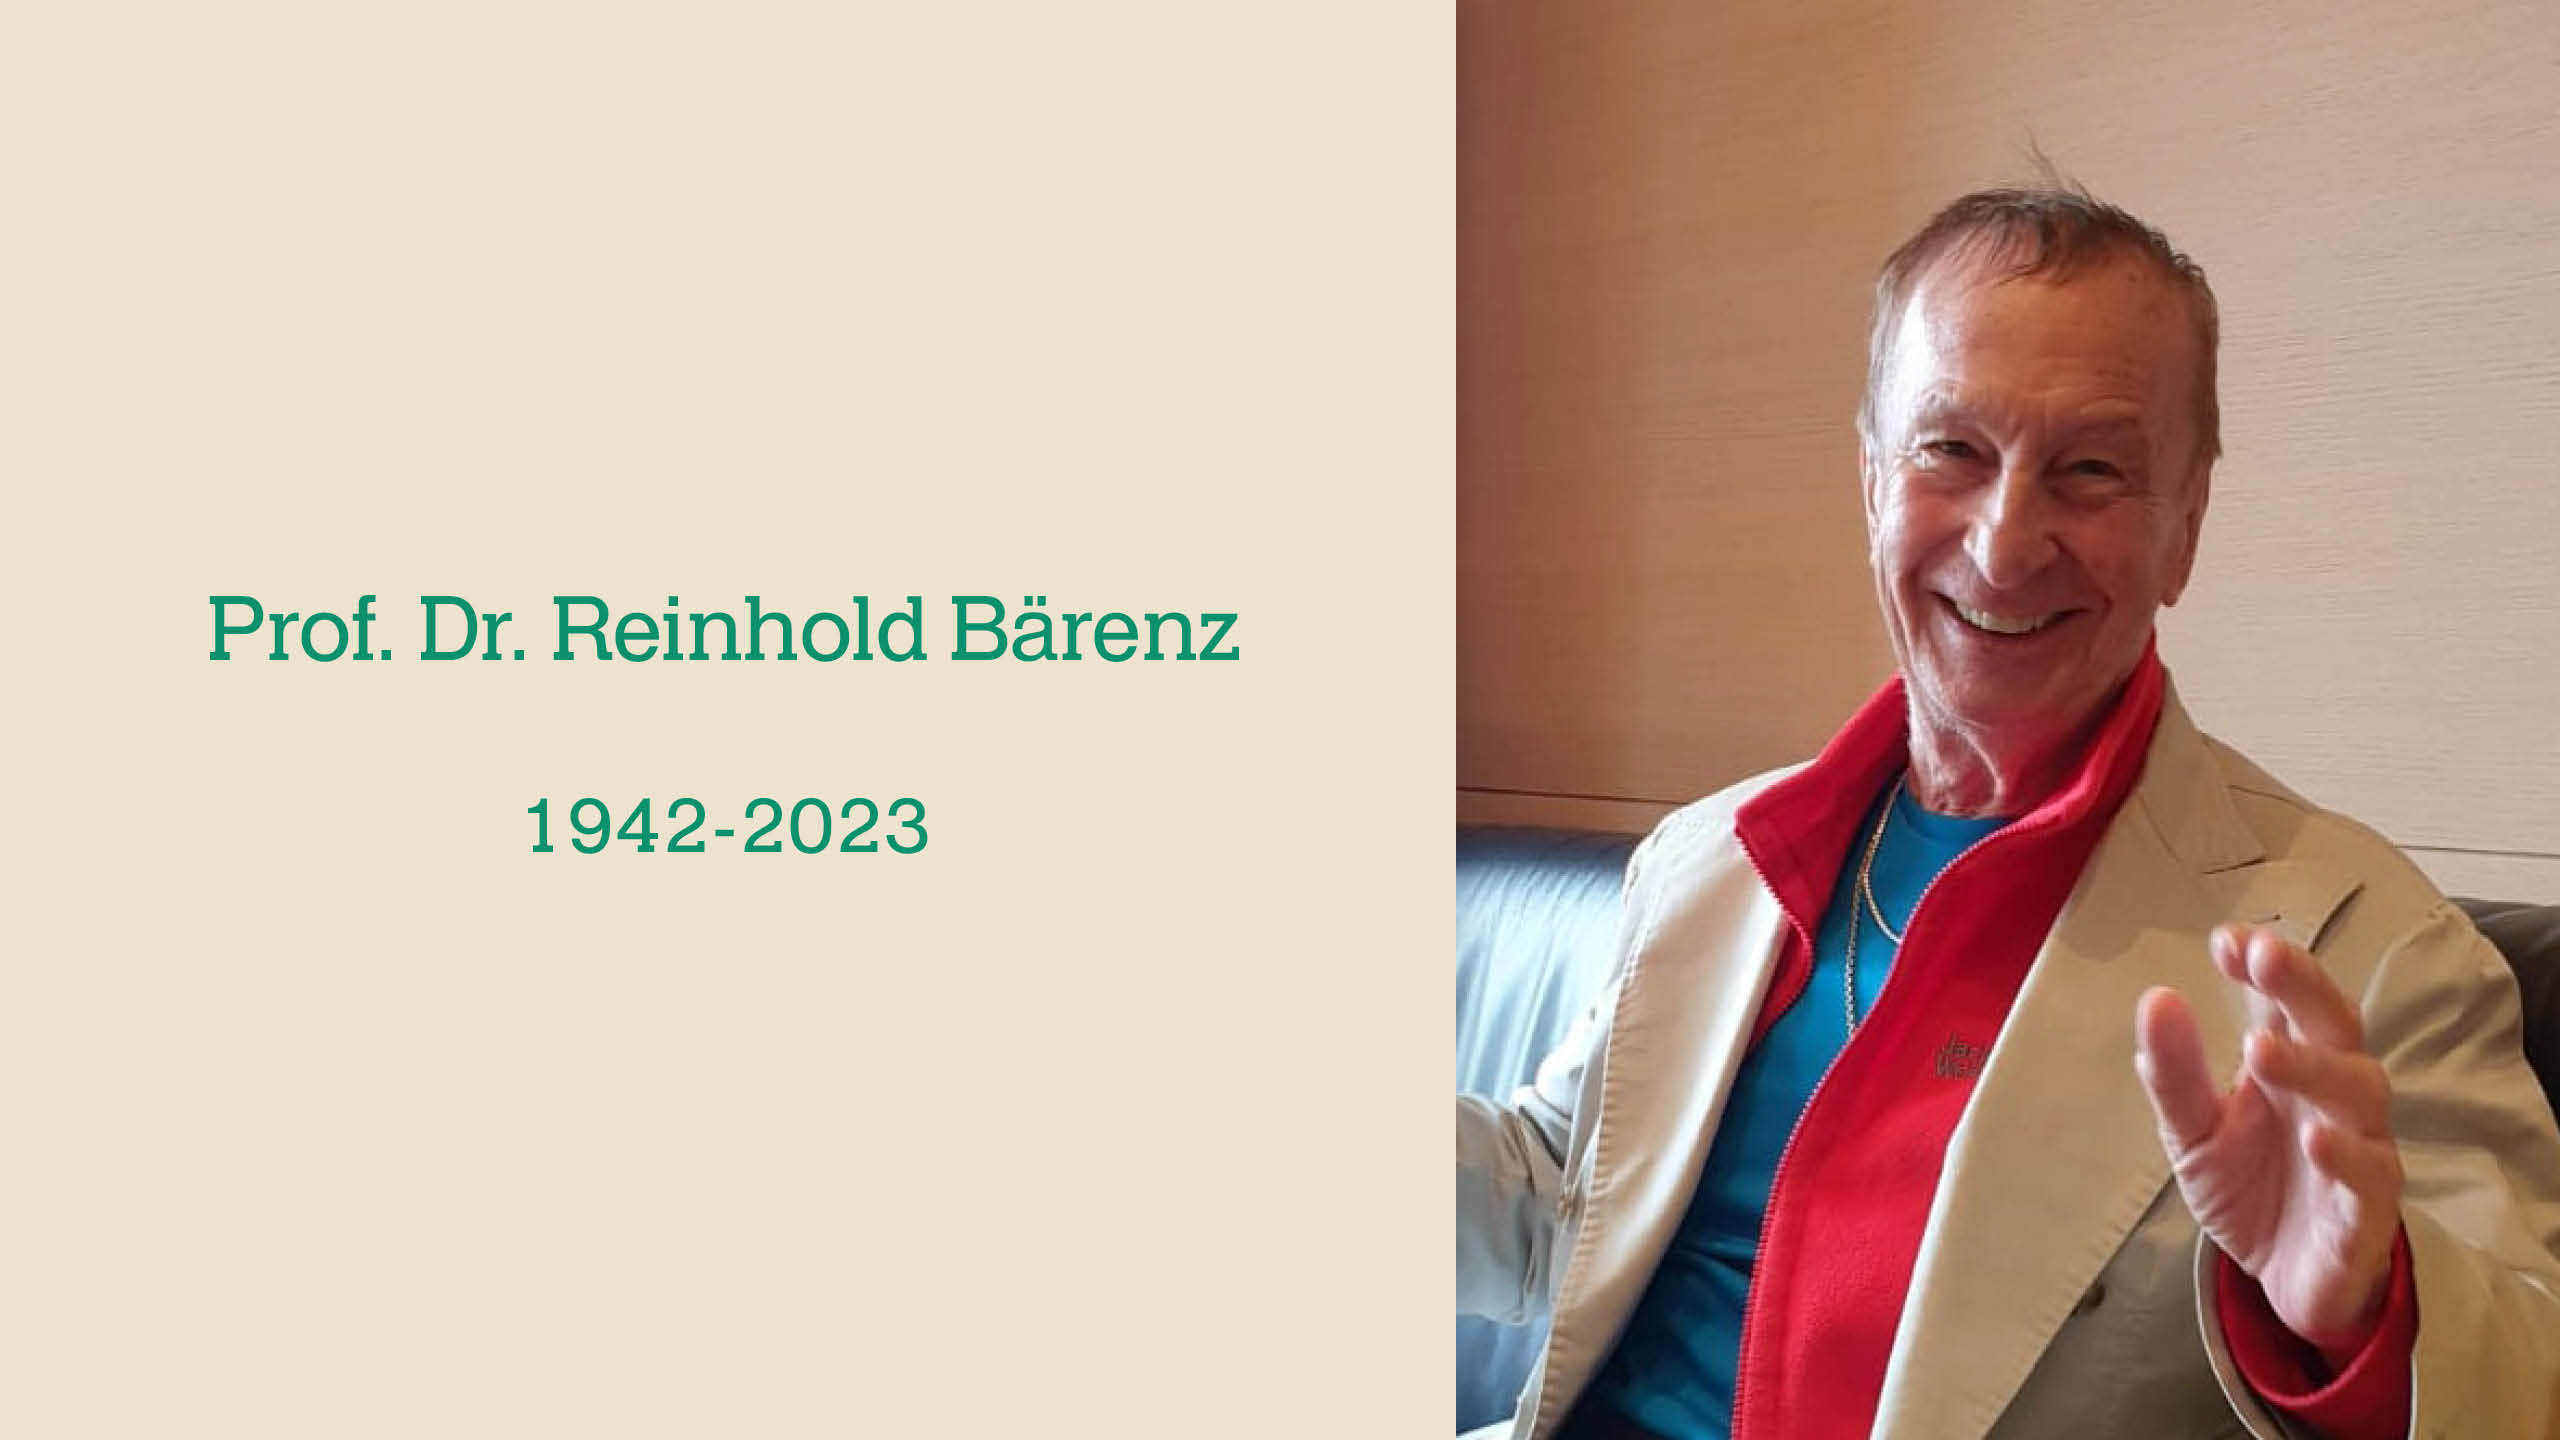 Prof. Dr. Reinhold Bärenz (1942-2023)